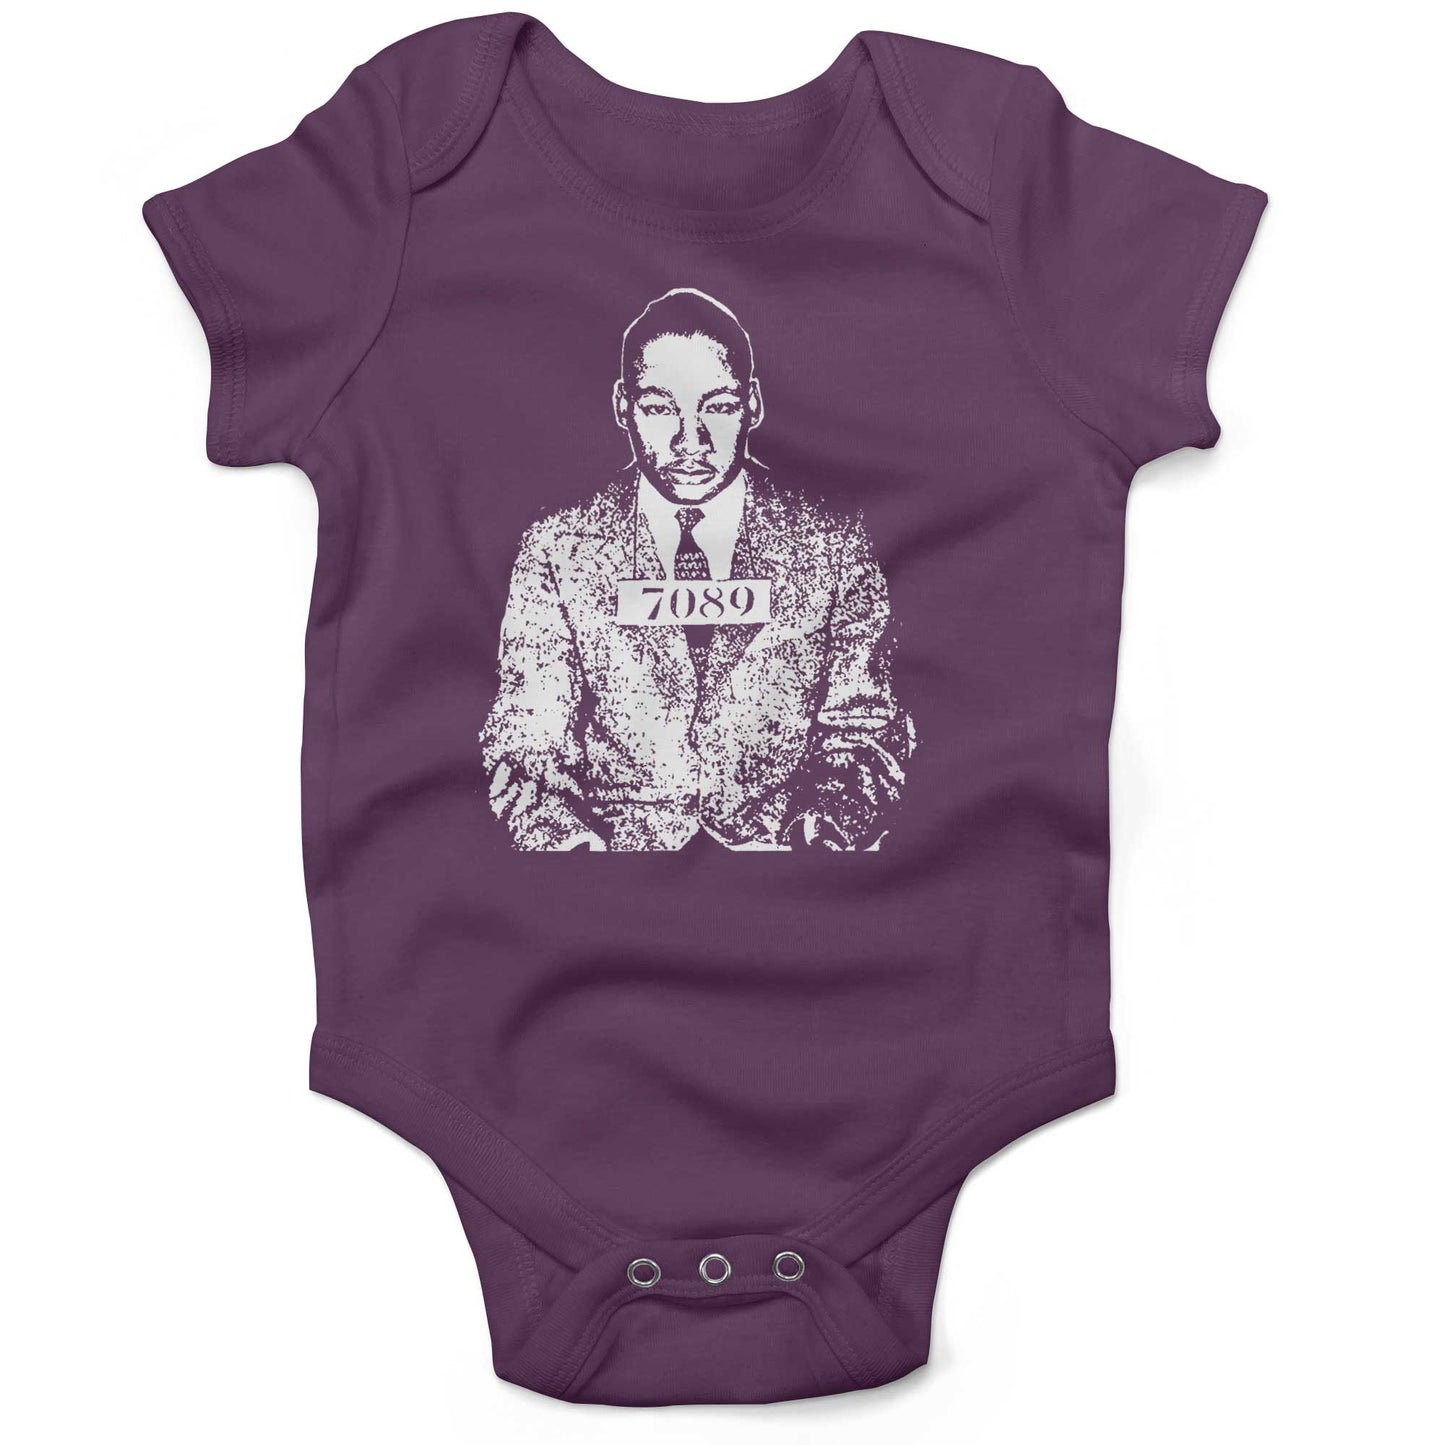 Martin Luther King Jr. Infant Bodysuit-Organic Purple-3-6 months